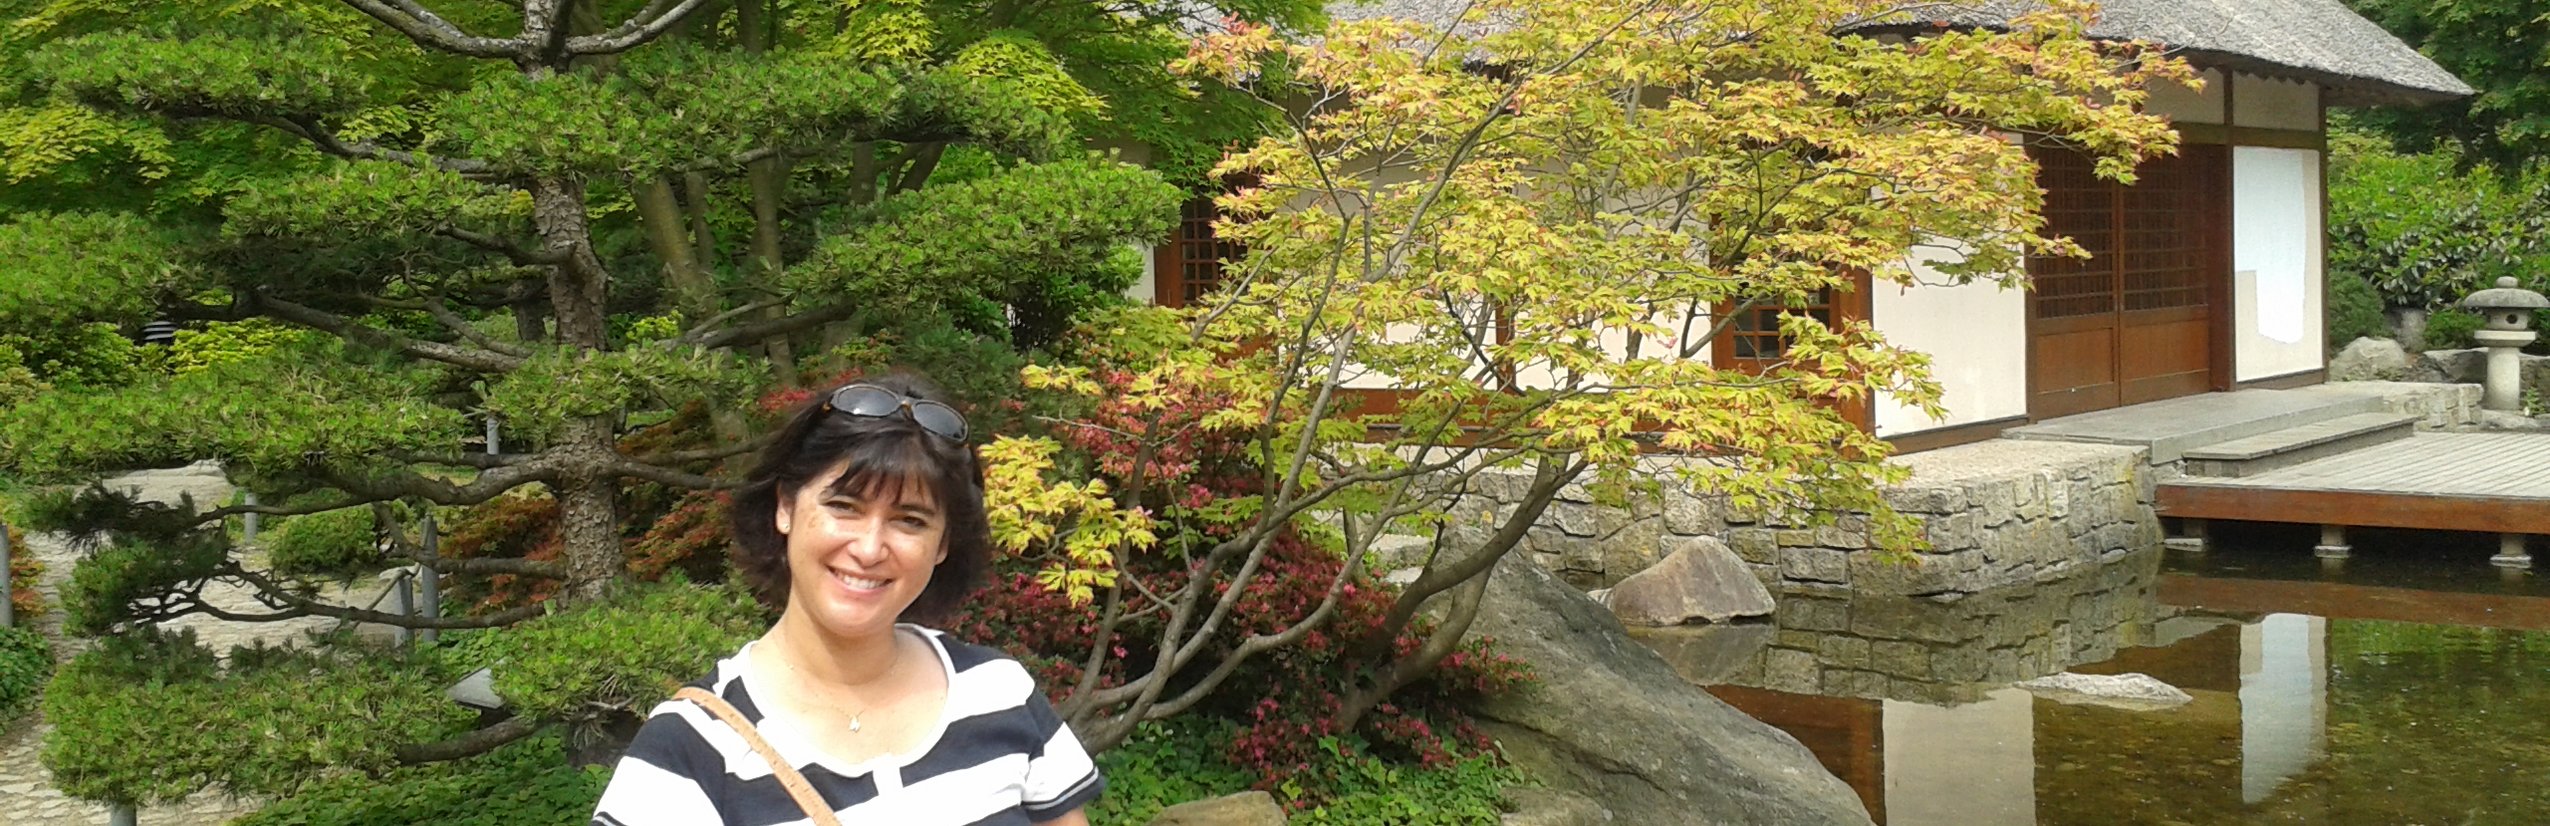 Japan mit Kindern - Japan Reise Interview - Frau vor japanischem Tempel